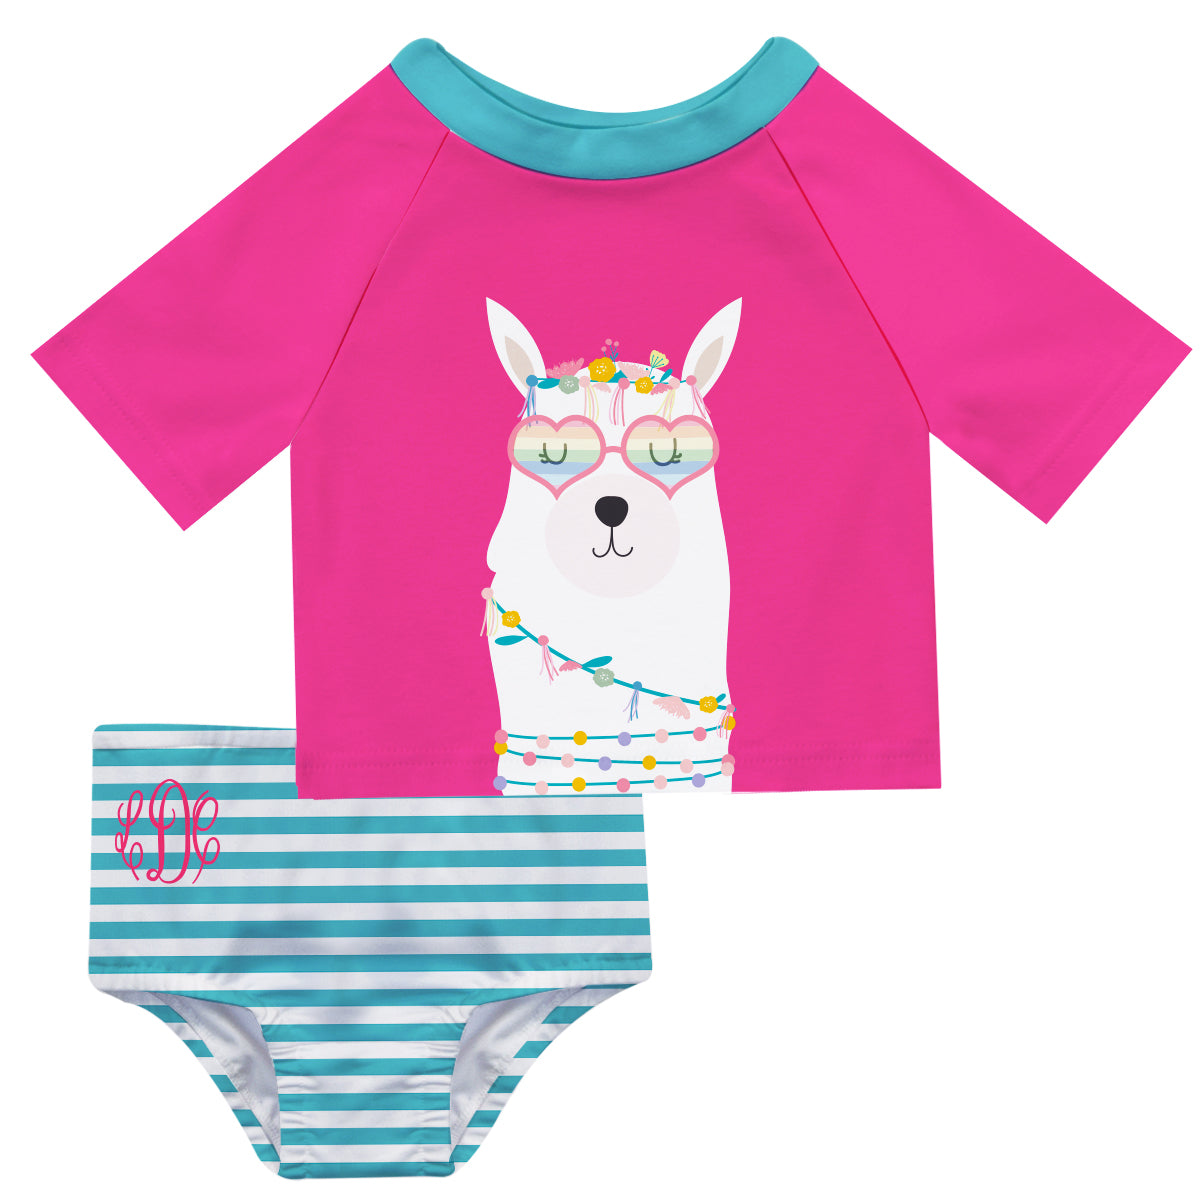 Llama Monogram Hot Pink and Turquoise Stripes 2pc Short Sleeve Rash Guard - Wimziy&Co.